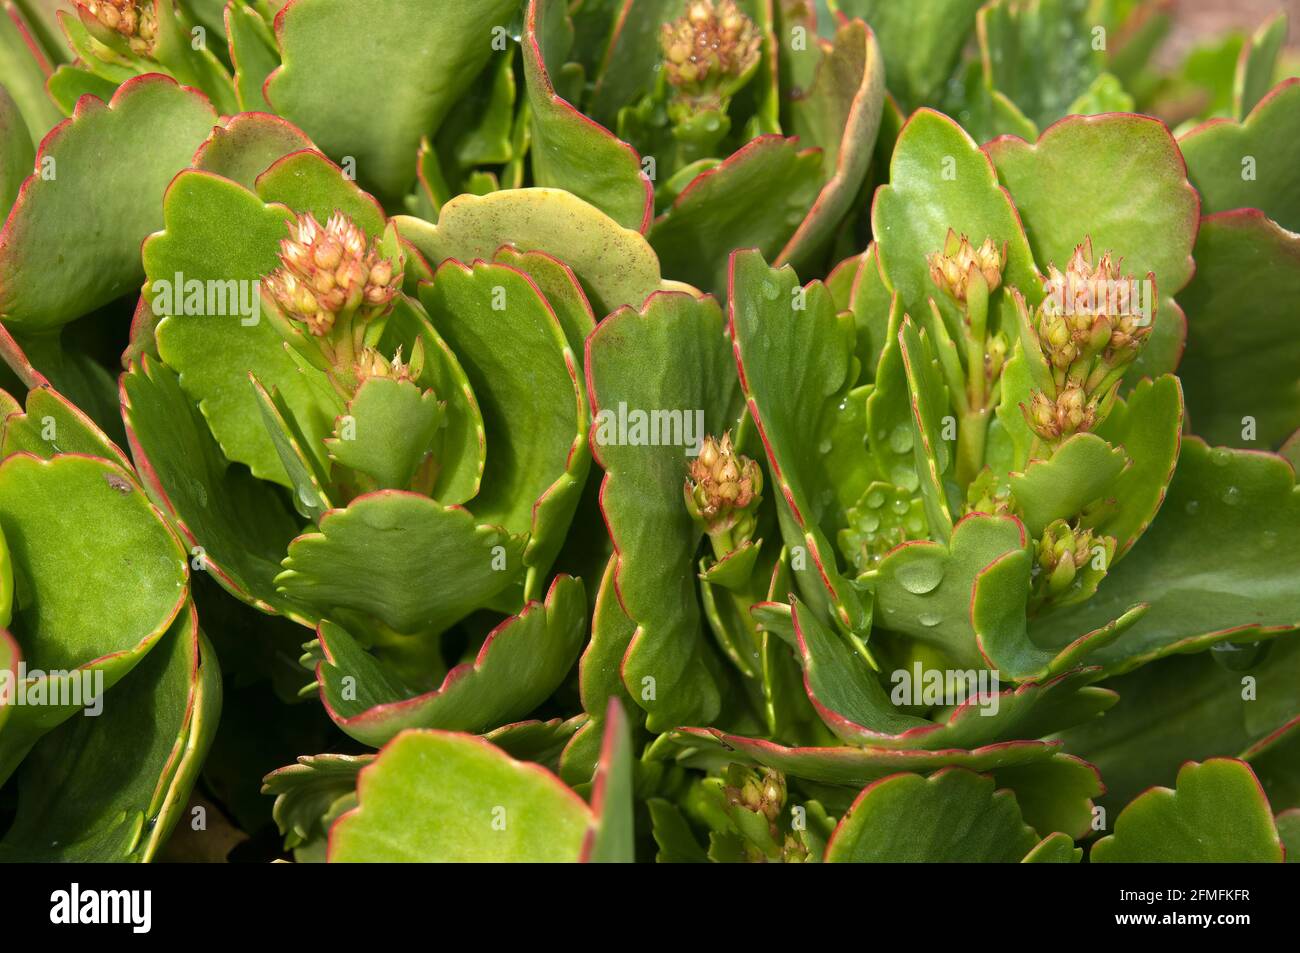 Sydney Australia, leaves and buds of a calandiva kalanchoe succulent Stock Photo